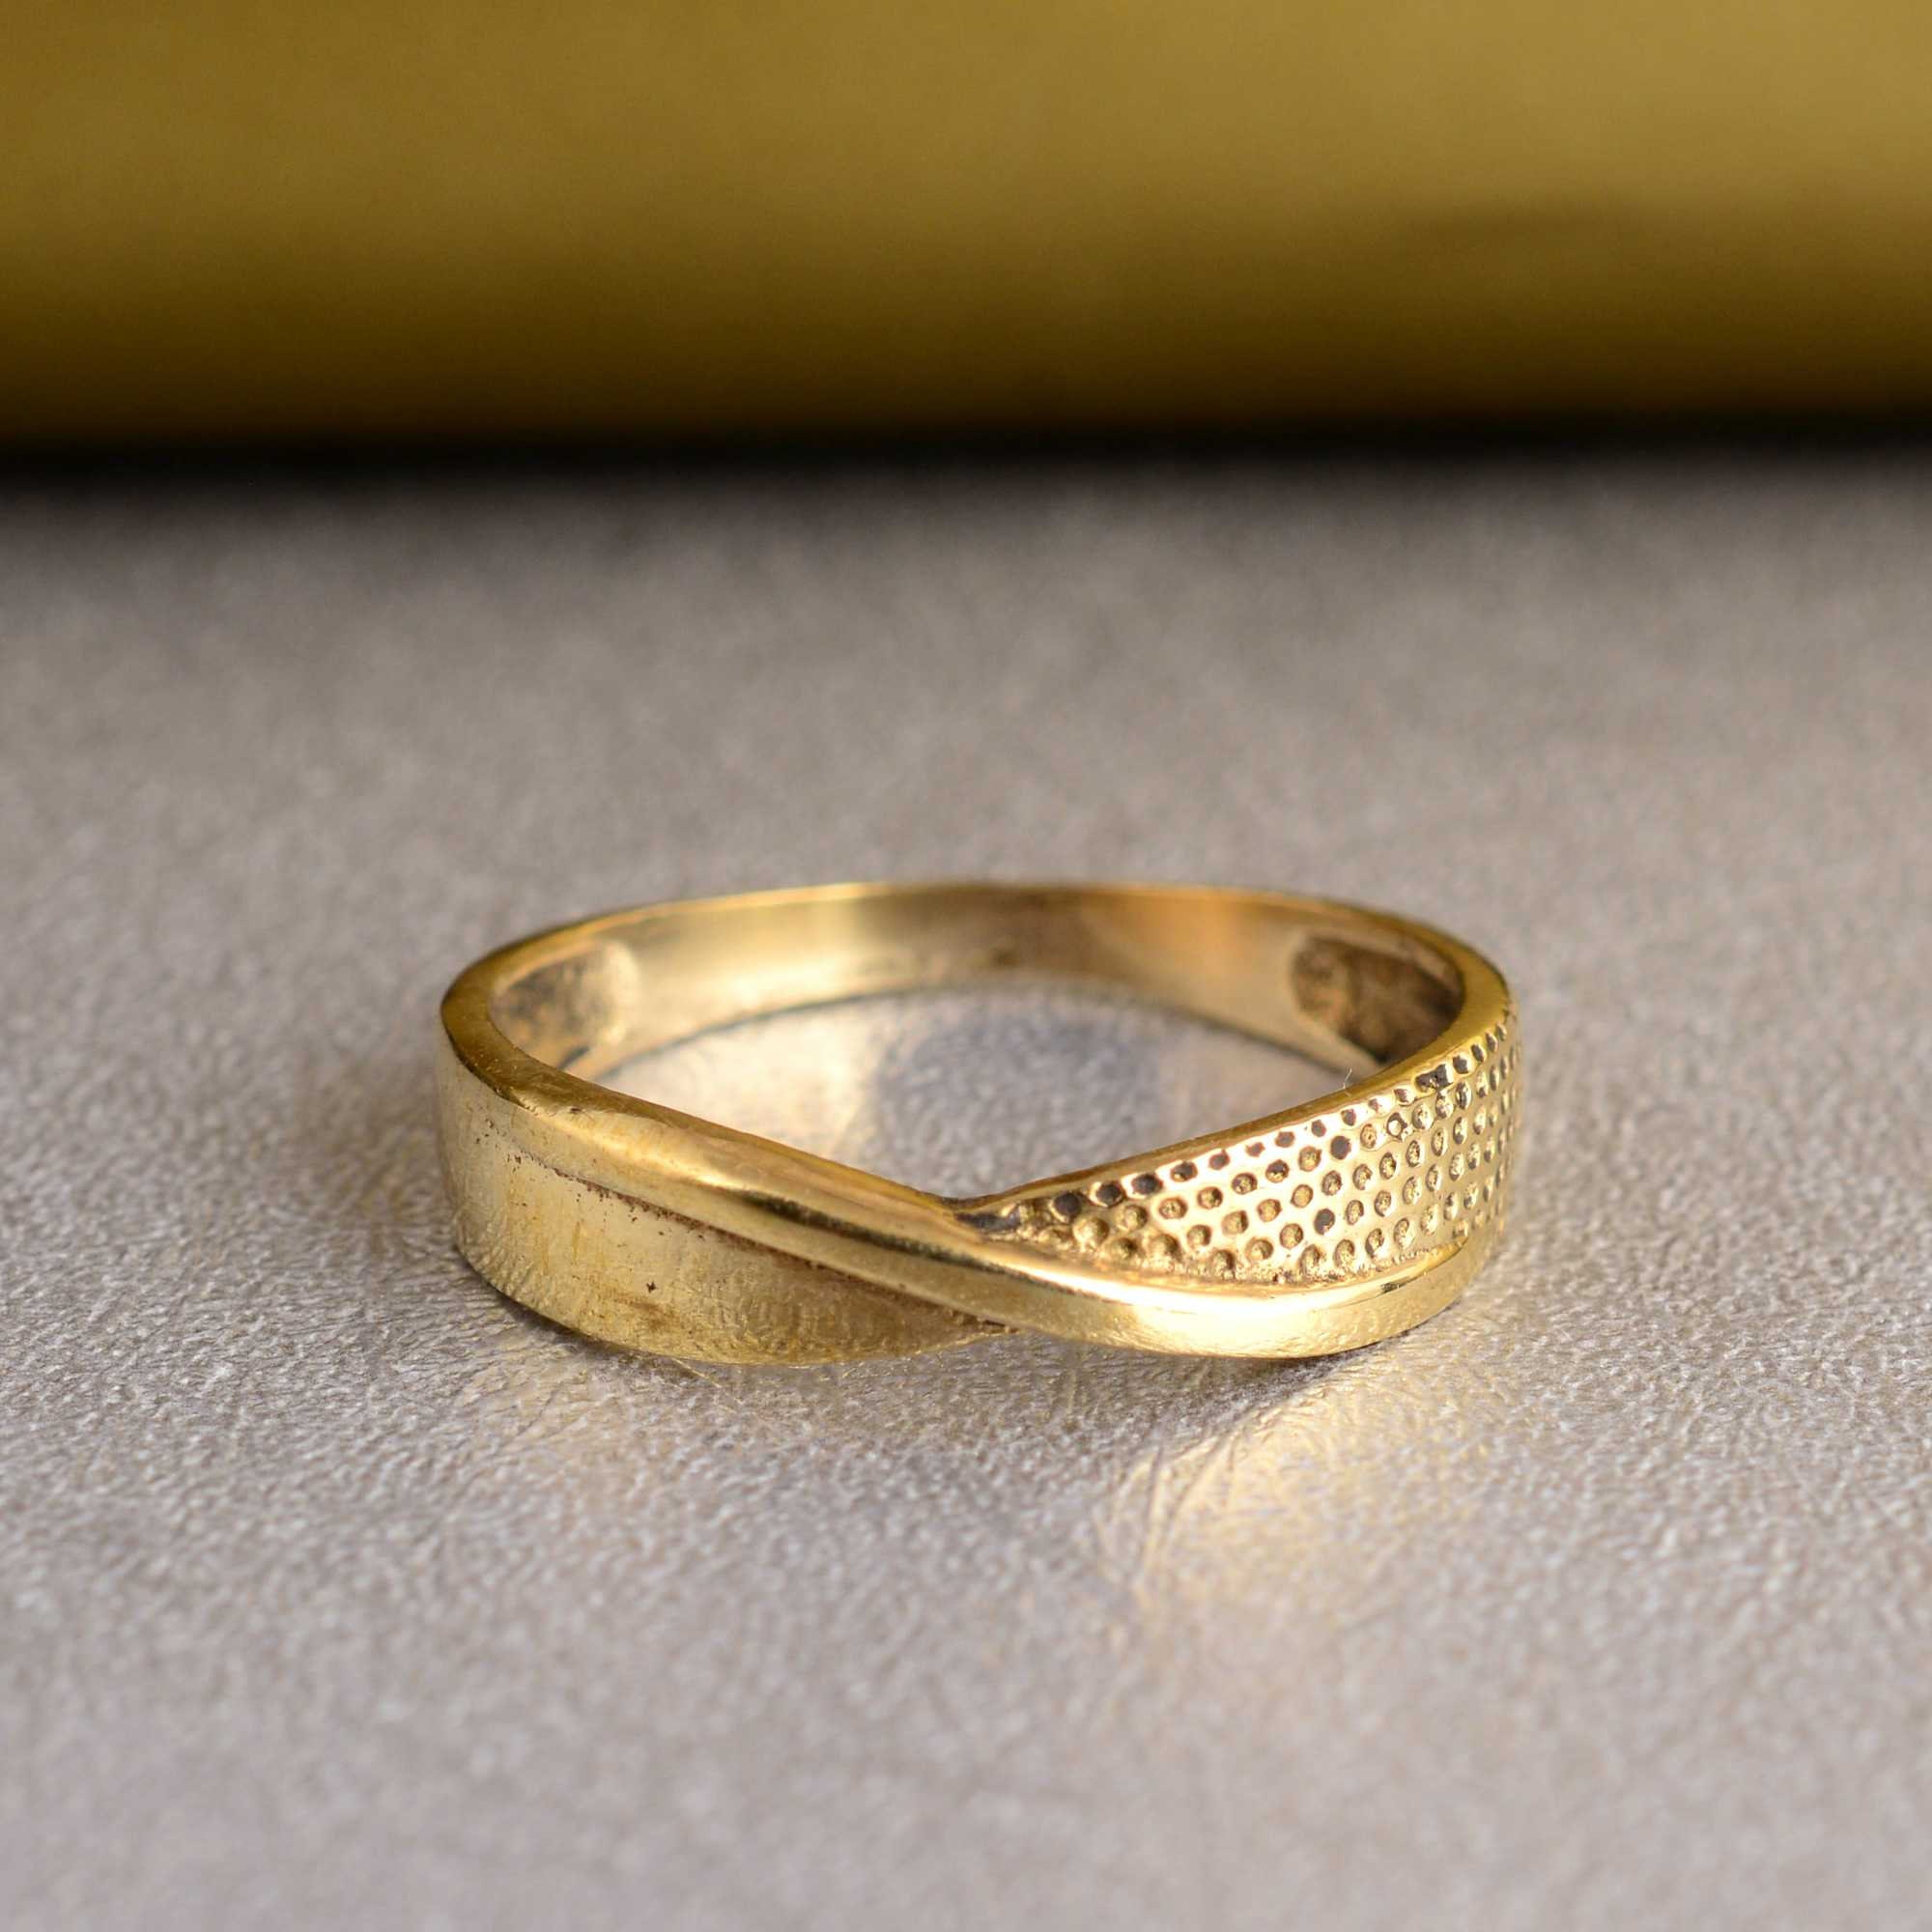 James Avery 14K Gold Petite Infinity Ring | Dillard's